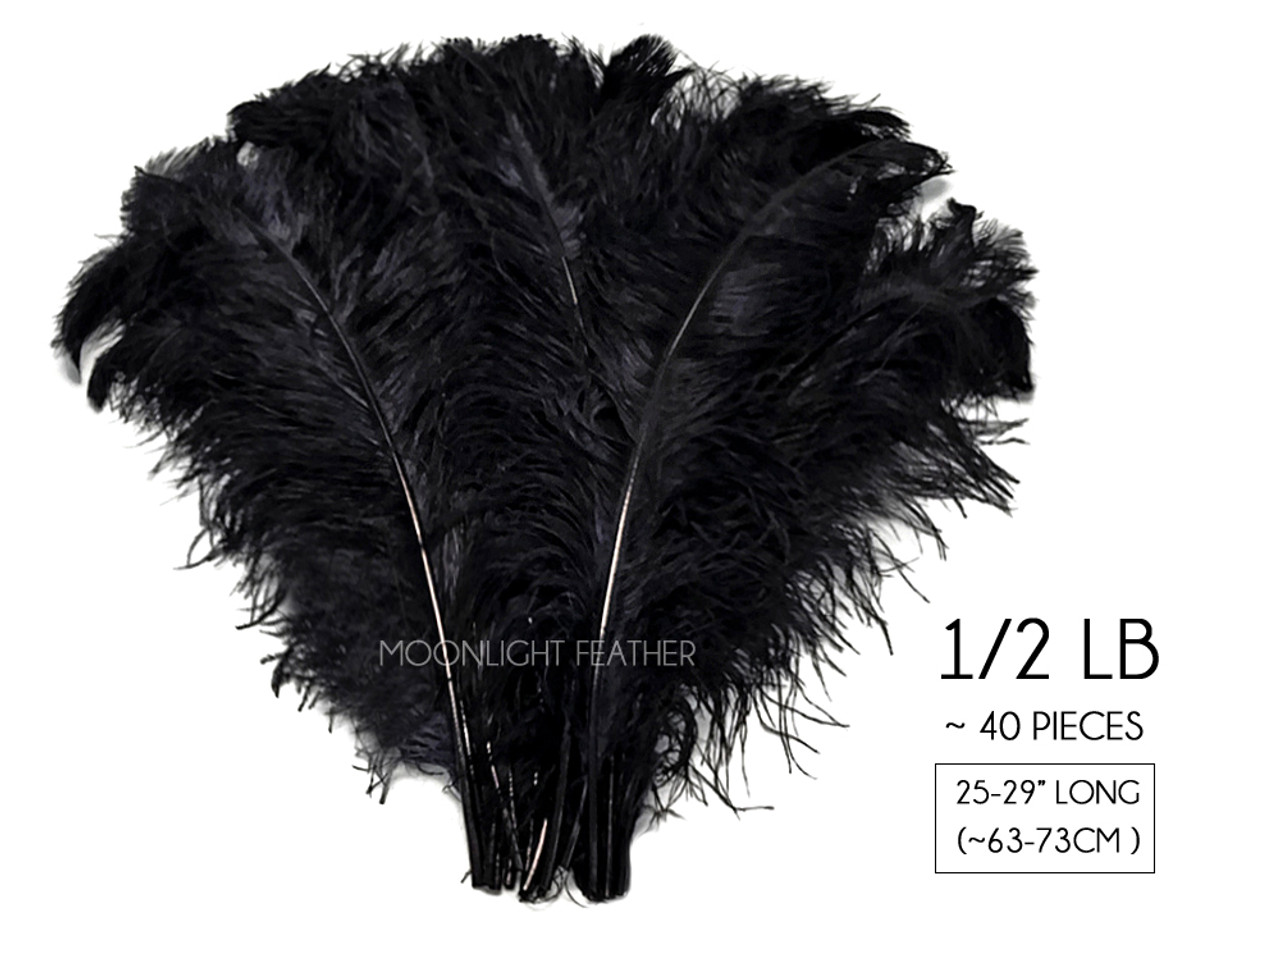 1/2 lb - 18-24 BLACK Large Wing Plumes Wholesale Feathers (bulk) SWA